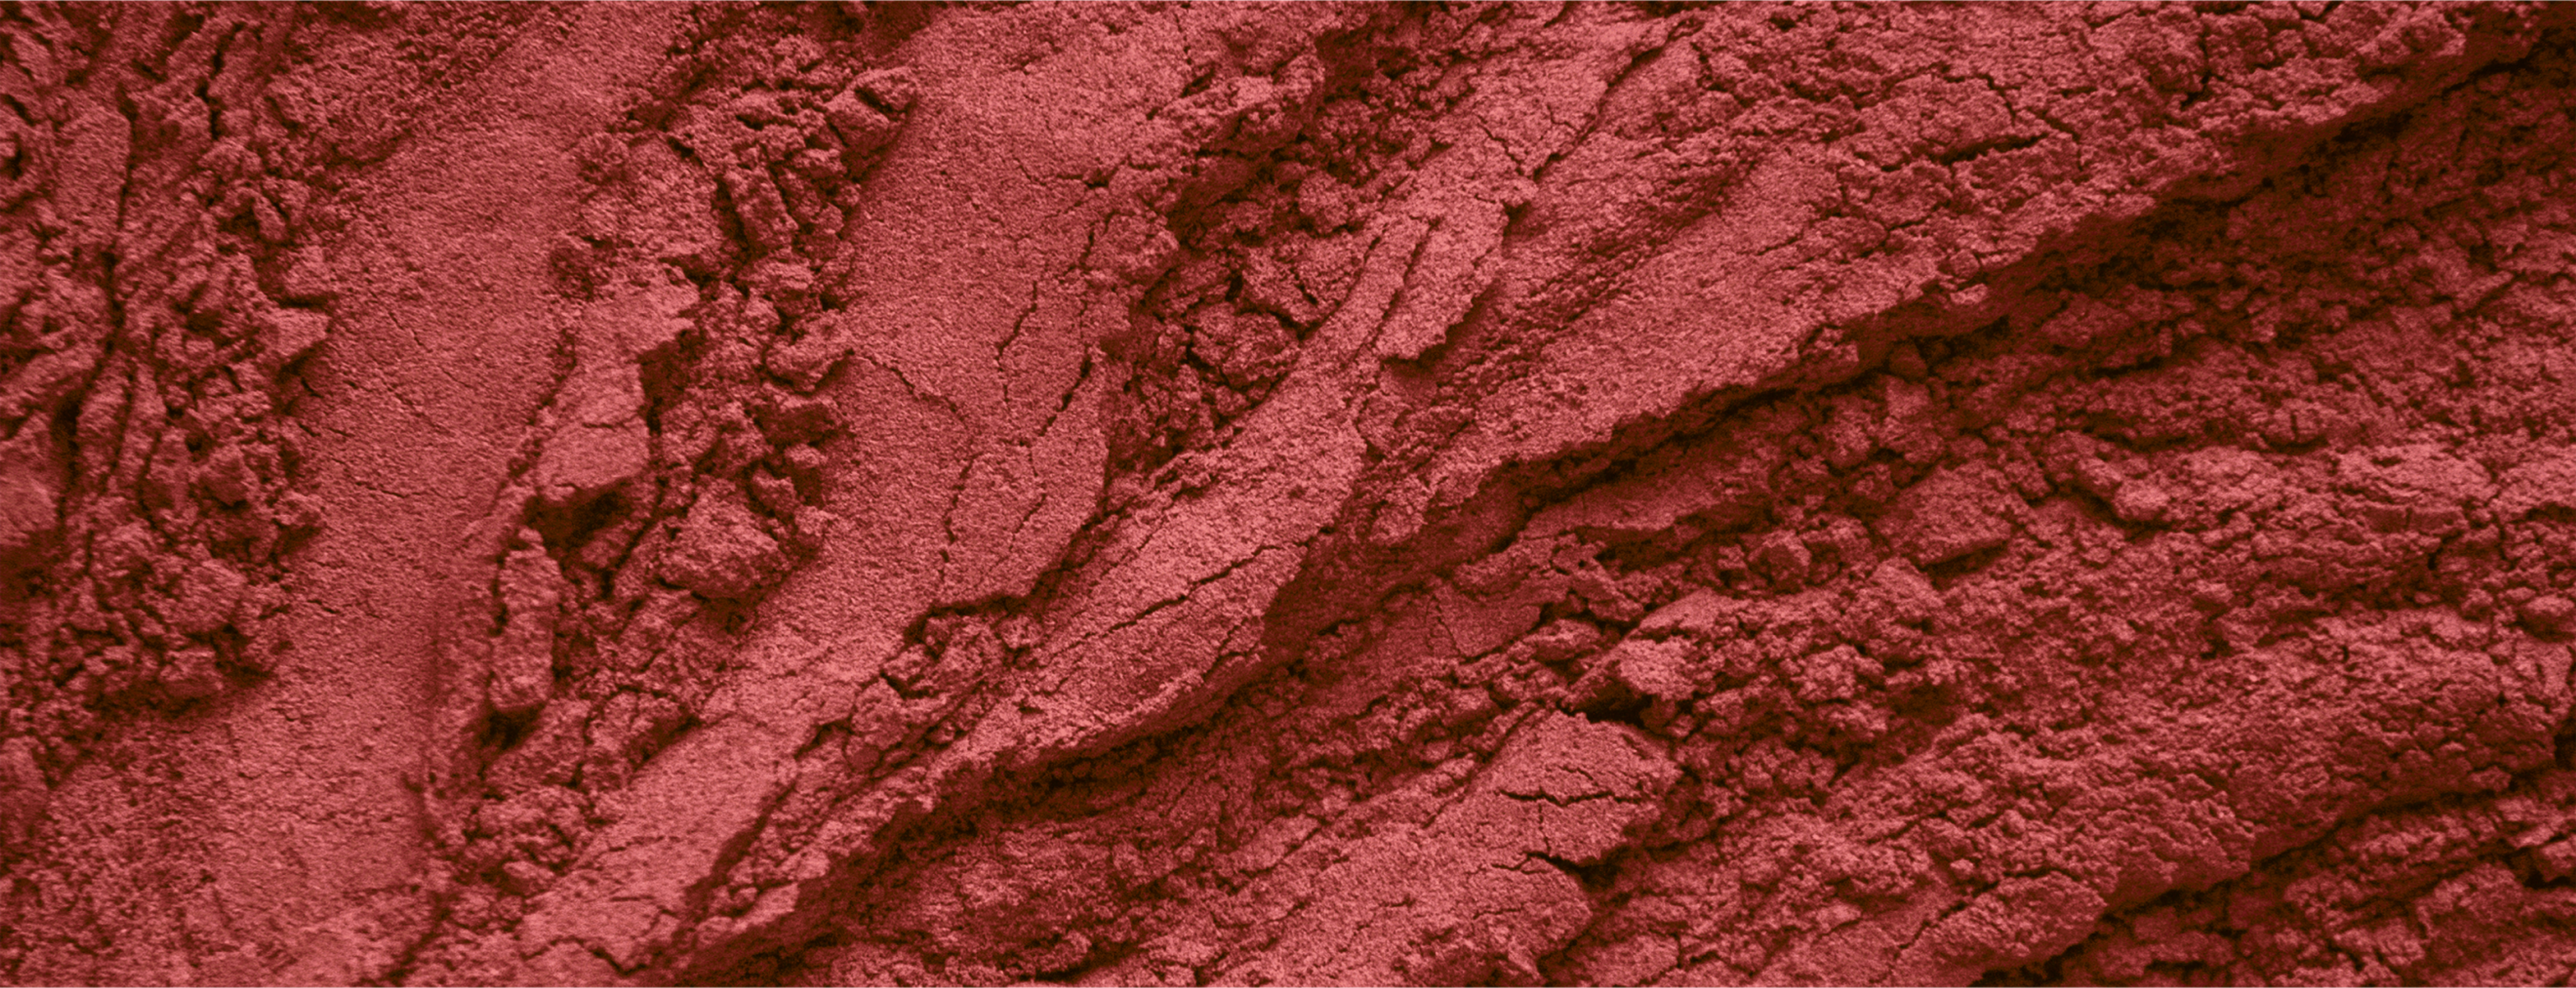 Pomegranate extract powder texture